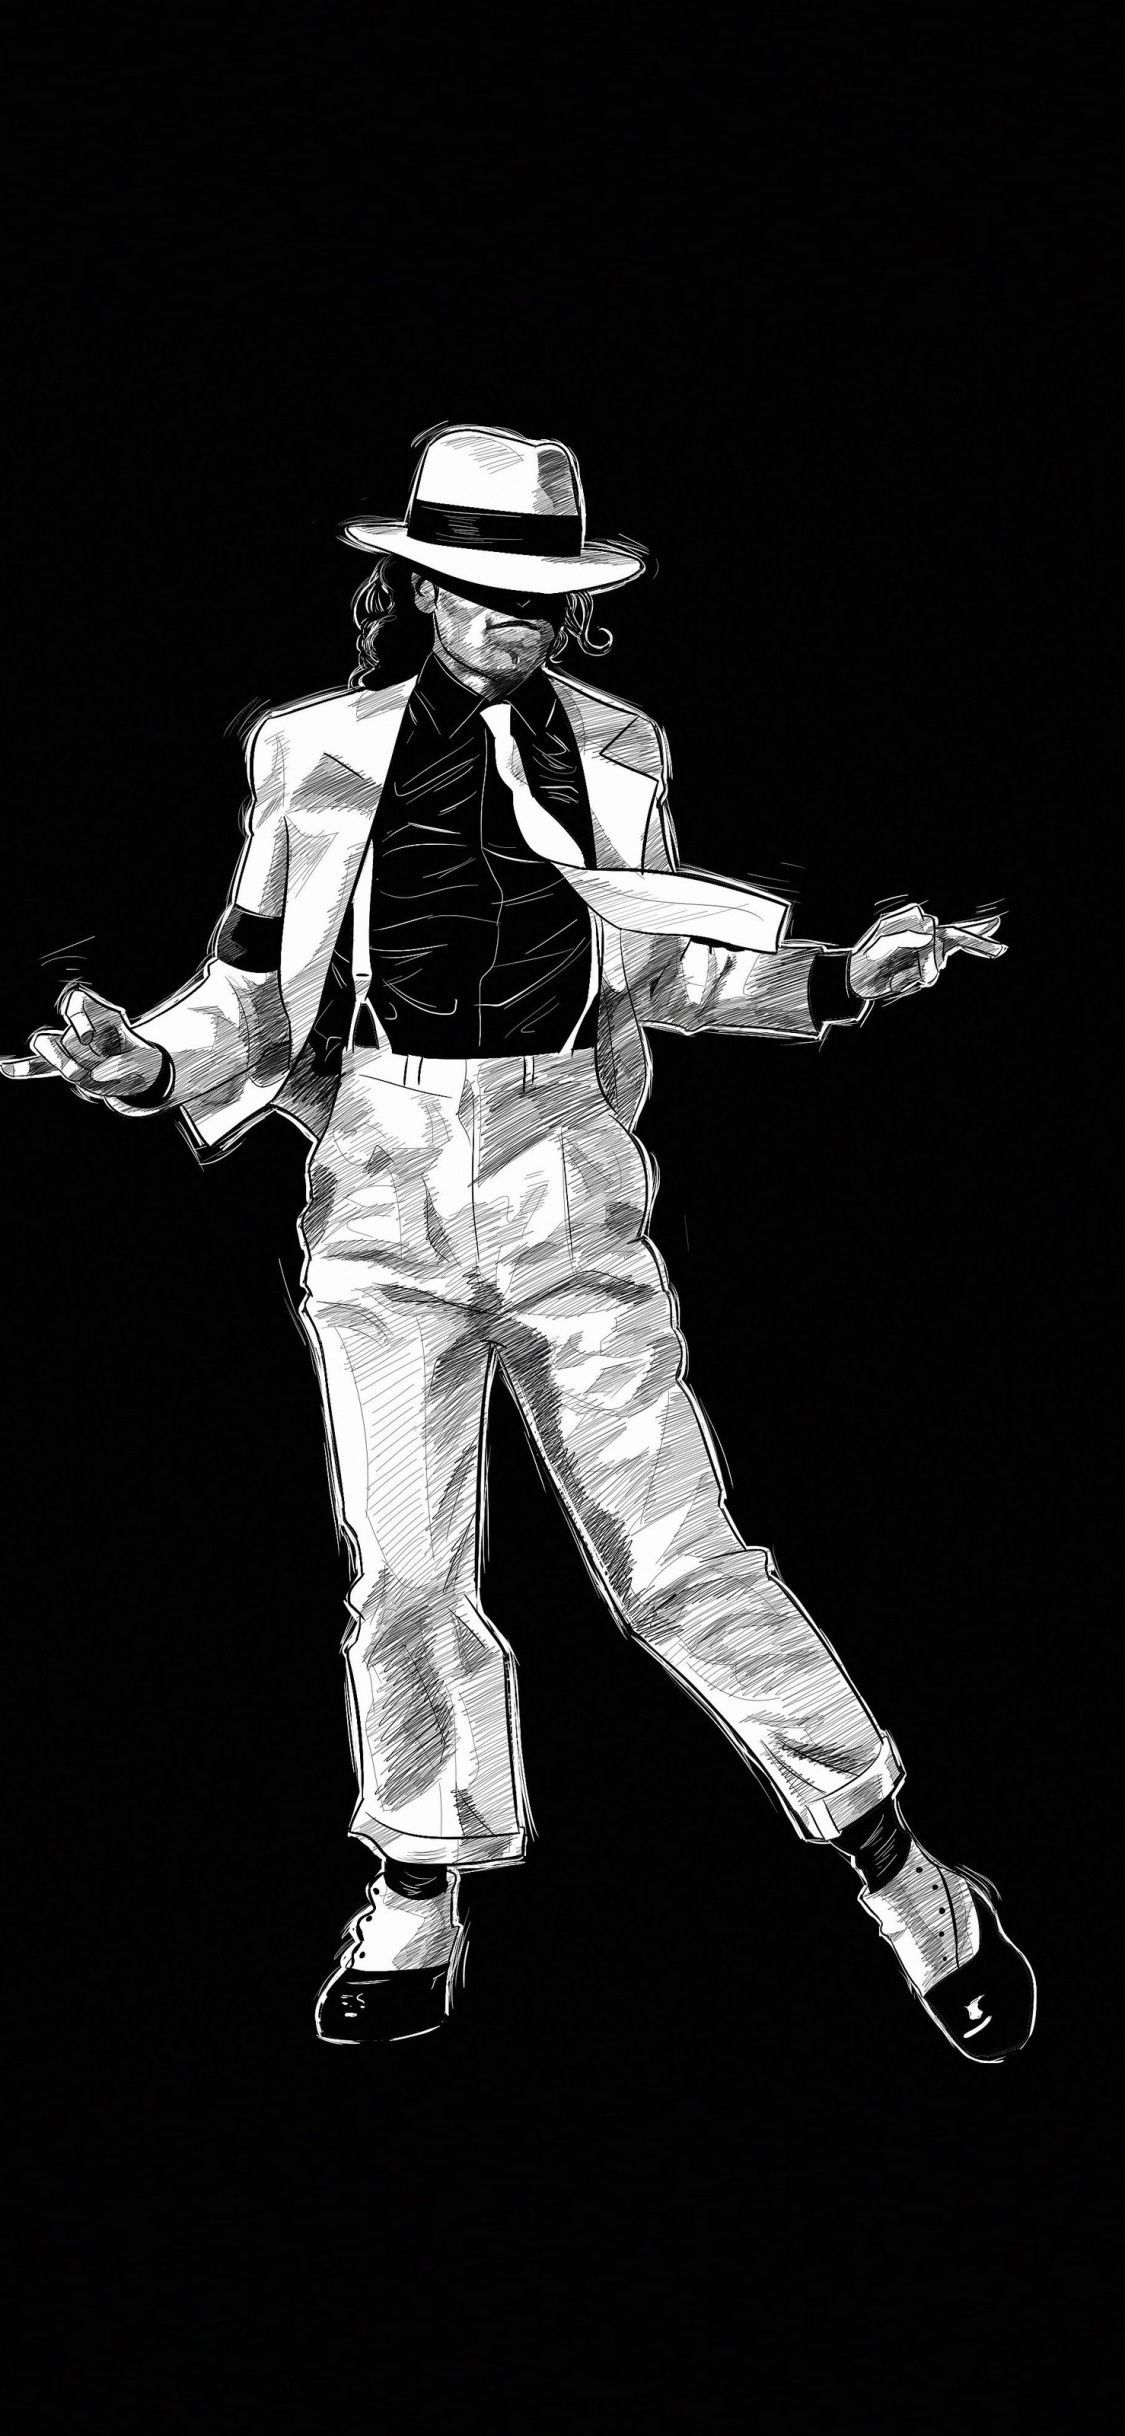 Michael Jackson, 1125x2436 wallpaper .com